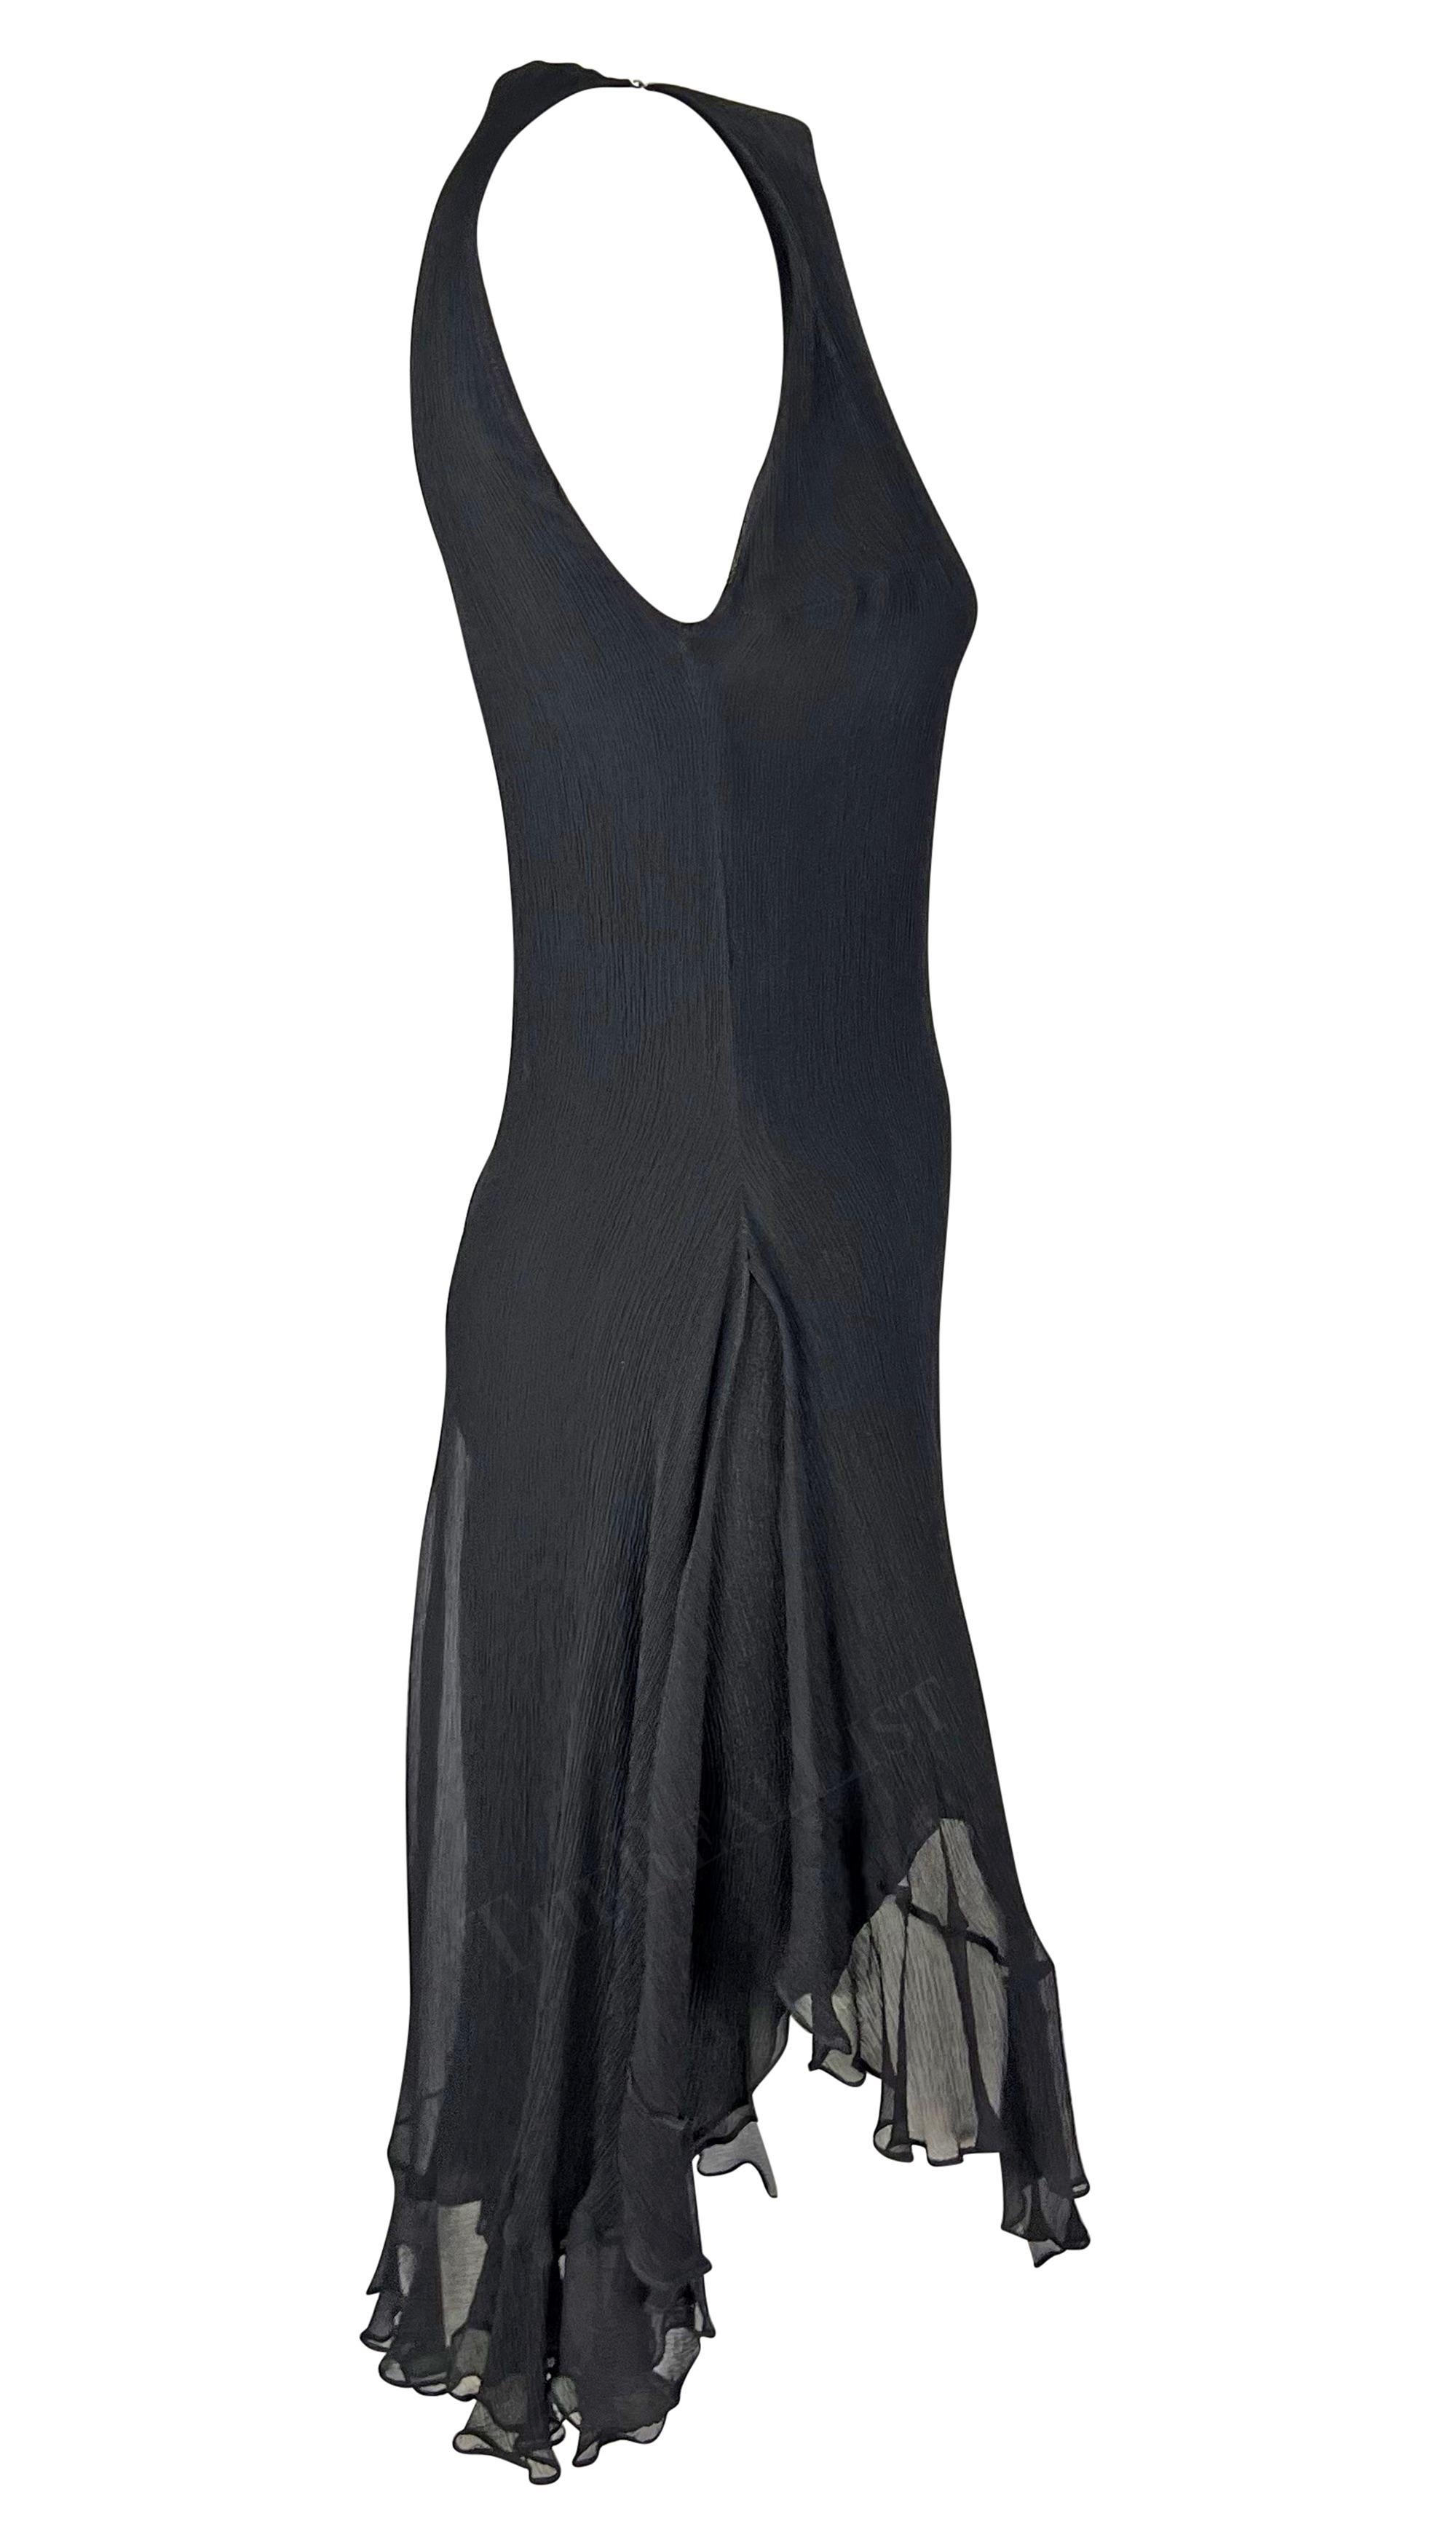 S/S 2000 Gucci by Tom Ford Black Crepe Silk Chiffon Ruffle Dress 2